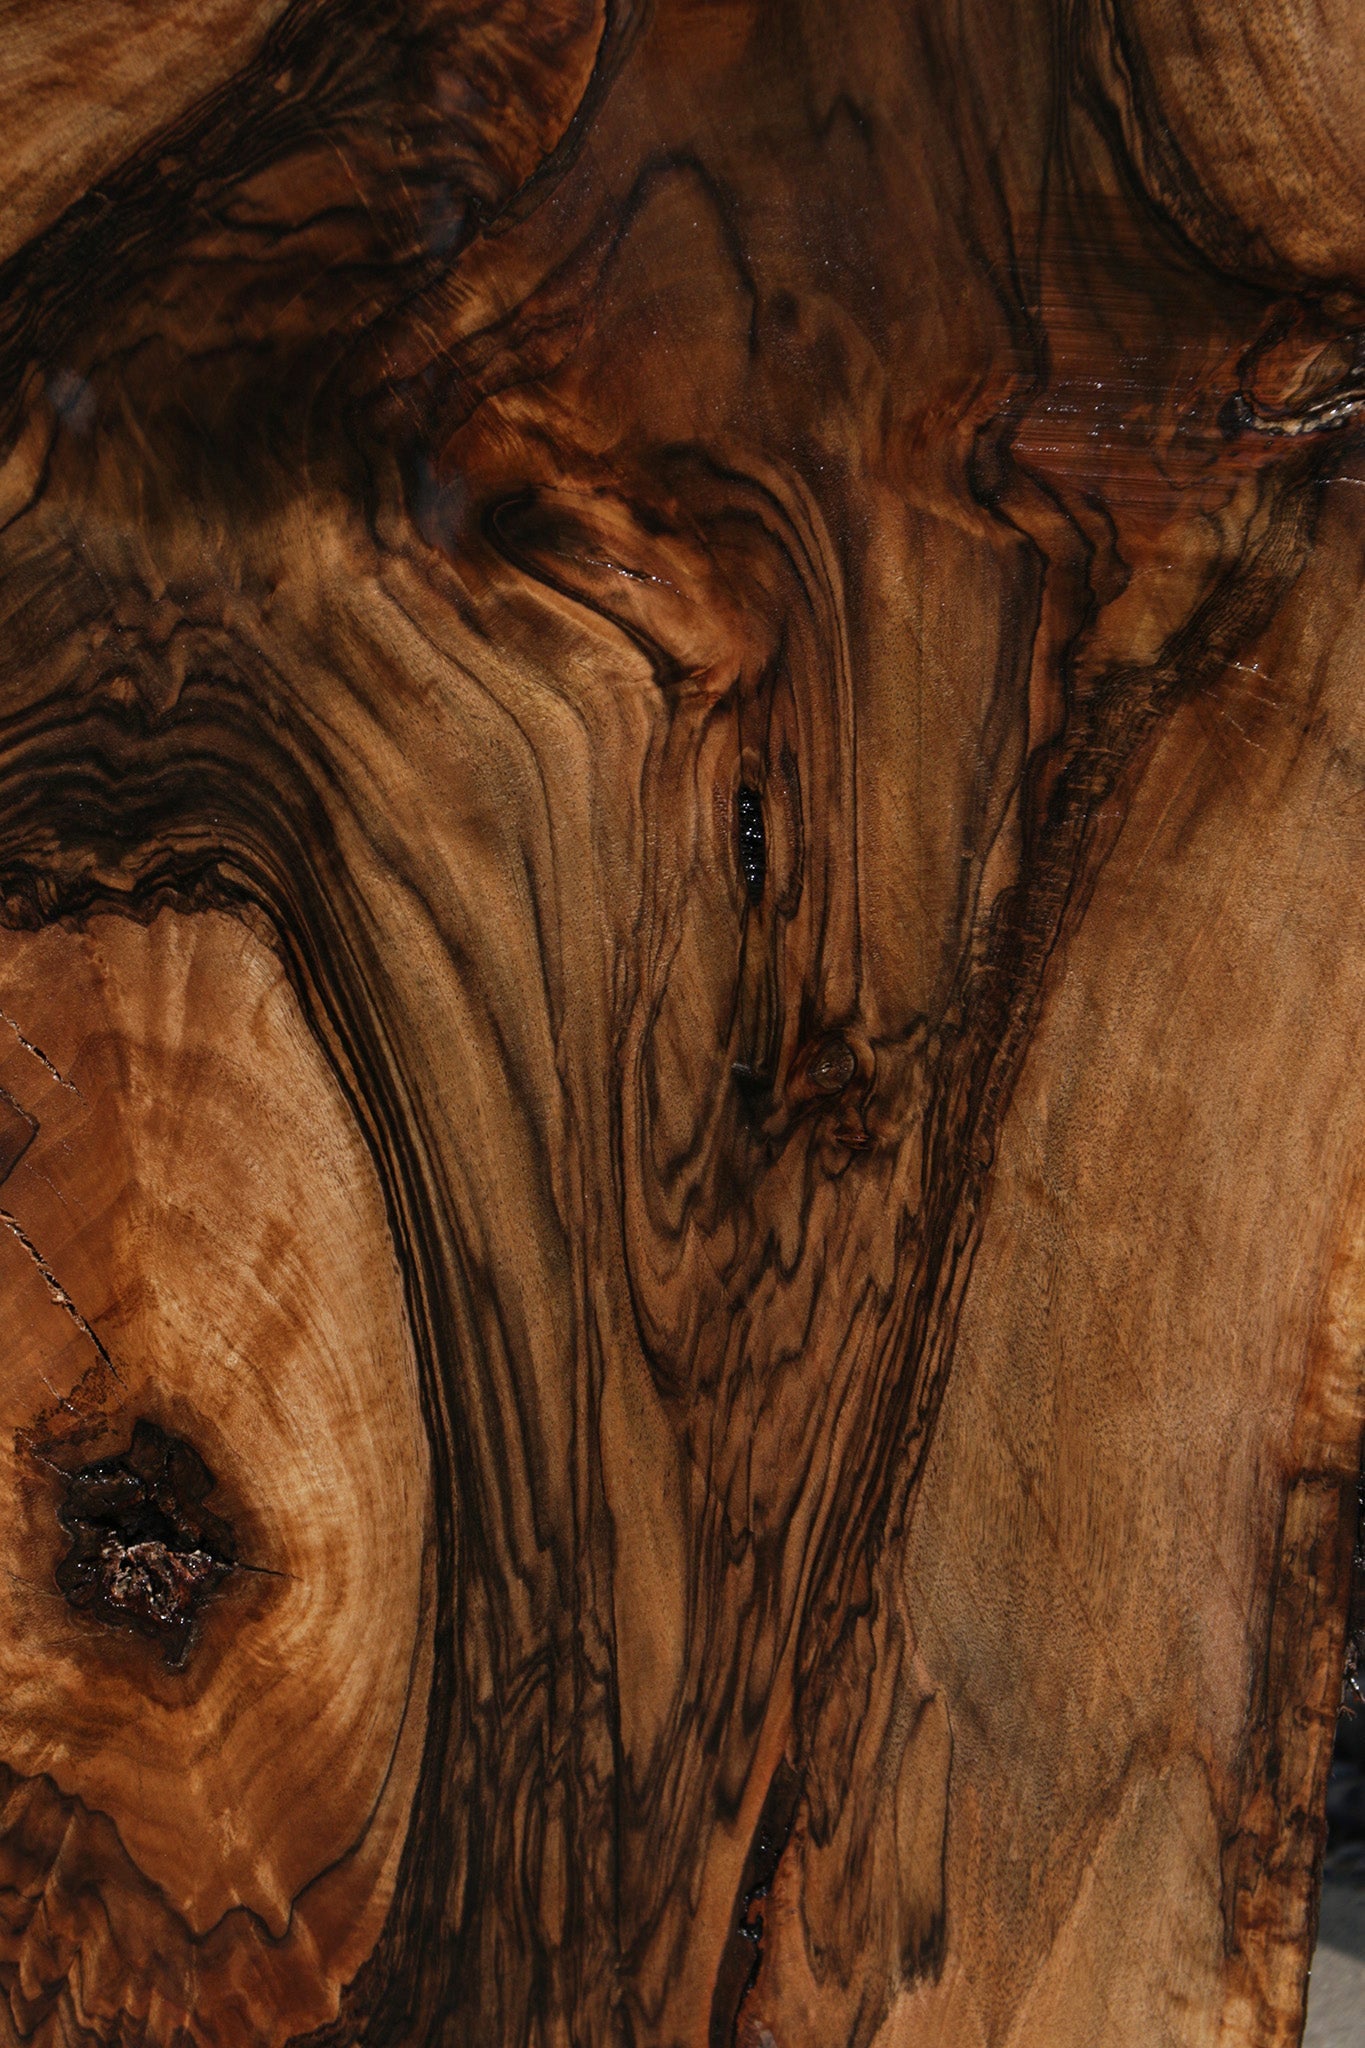 W22-9942 Bookmatch live edge walnut wood slab 99x42 – R-Home Furniture